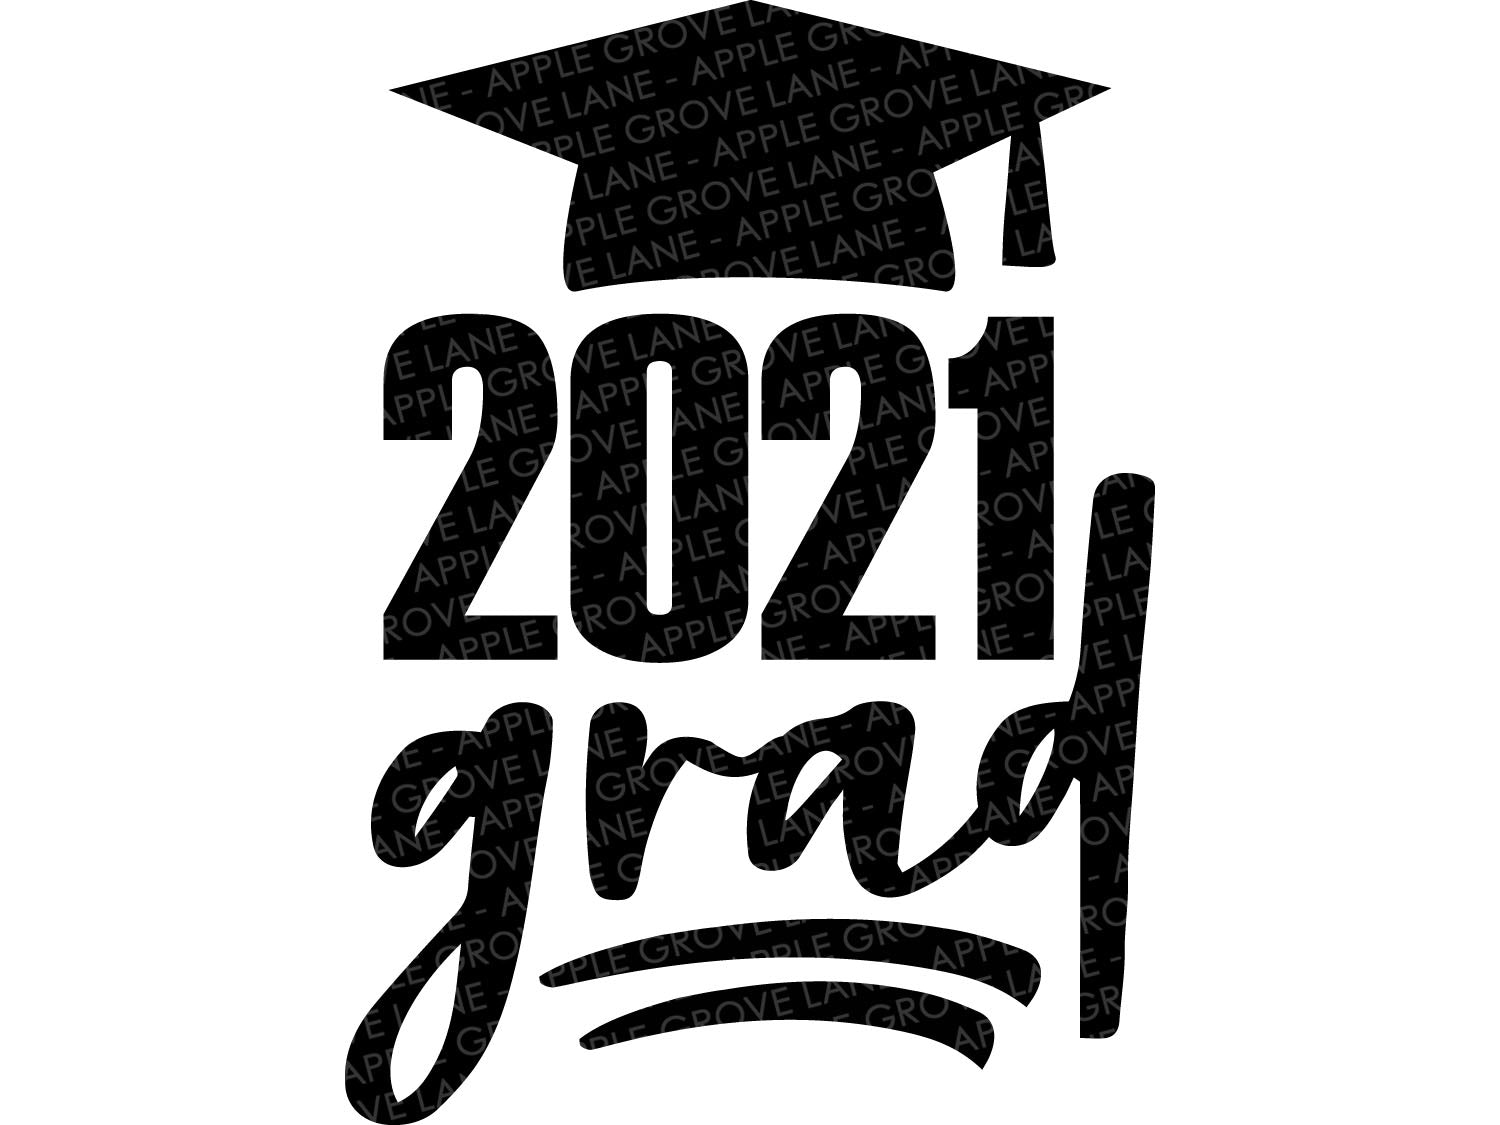 Download 2021 Grad Svg Class Of 2021 Svg 2021 Svg 2021 Graduation Svg G Apple Grove Lane